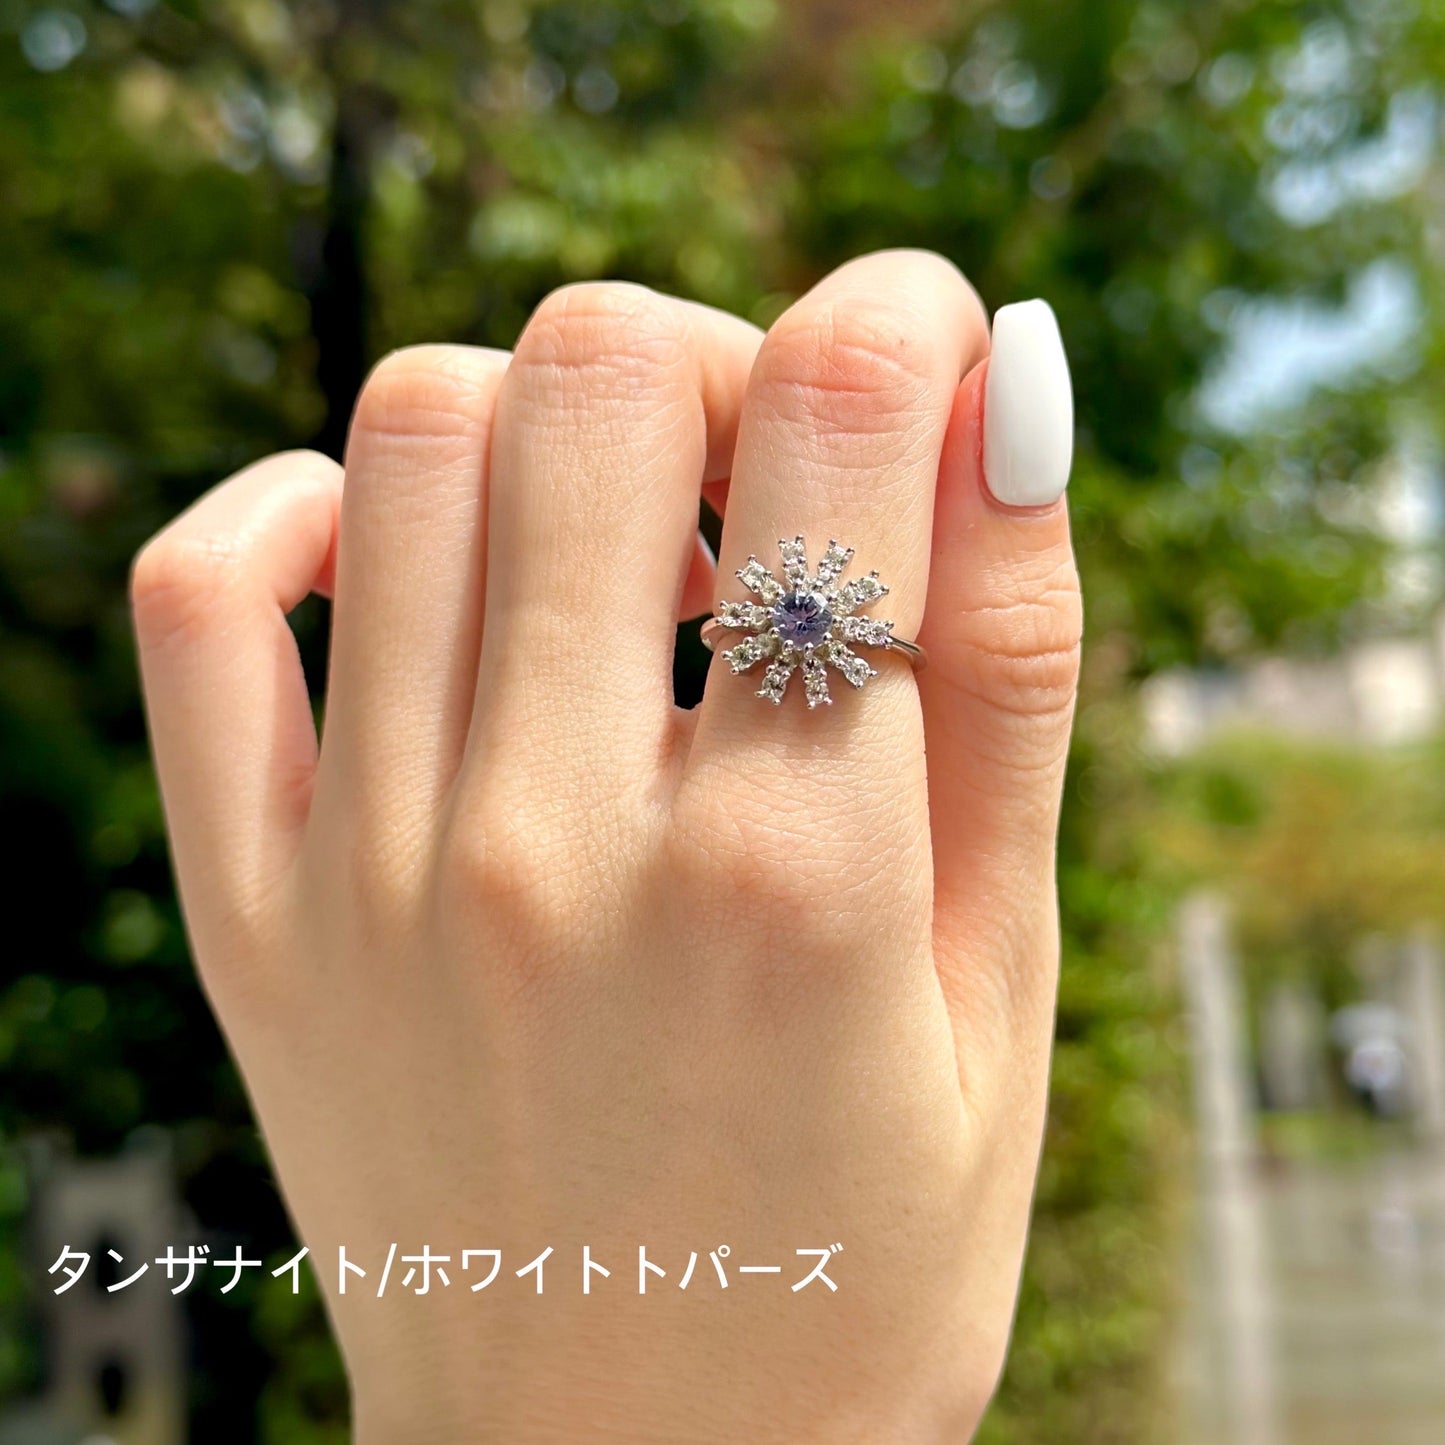 【Biju mam poco】Flower ring